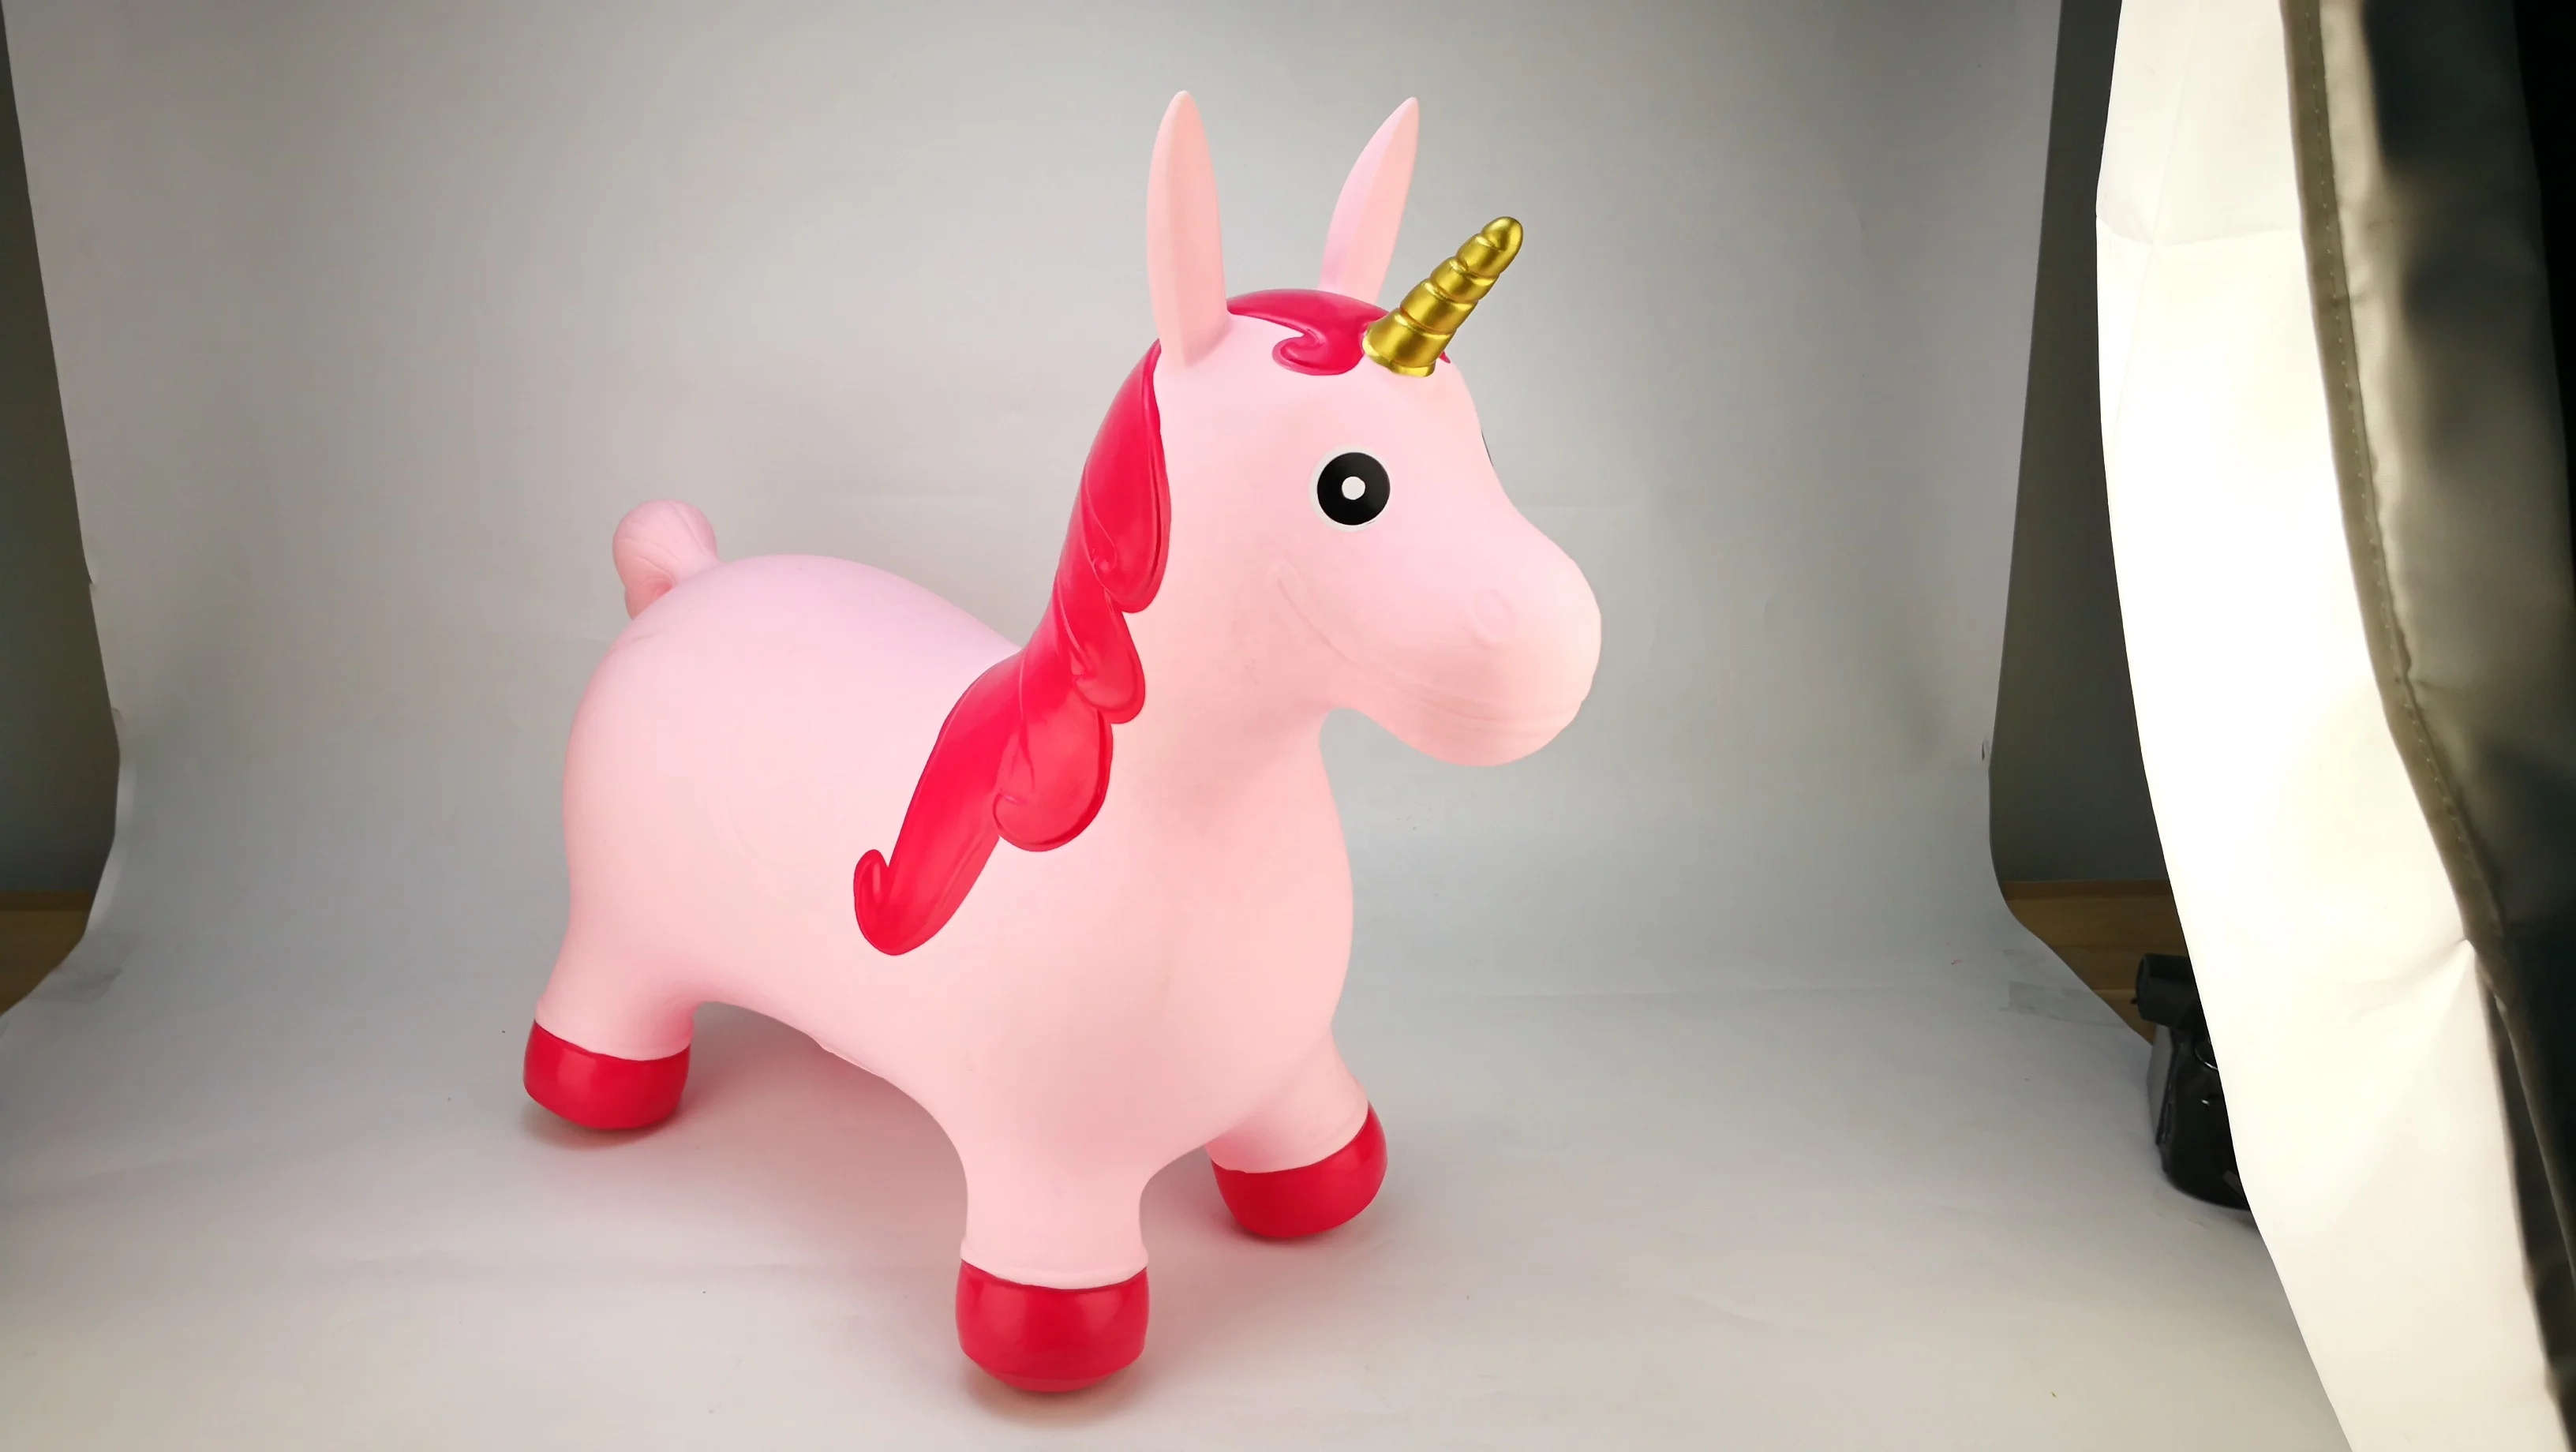 
Inflatable unicorn toy for kids ride on unicor animal hopper 